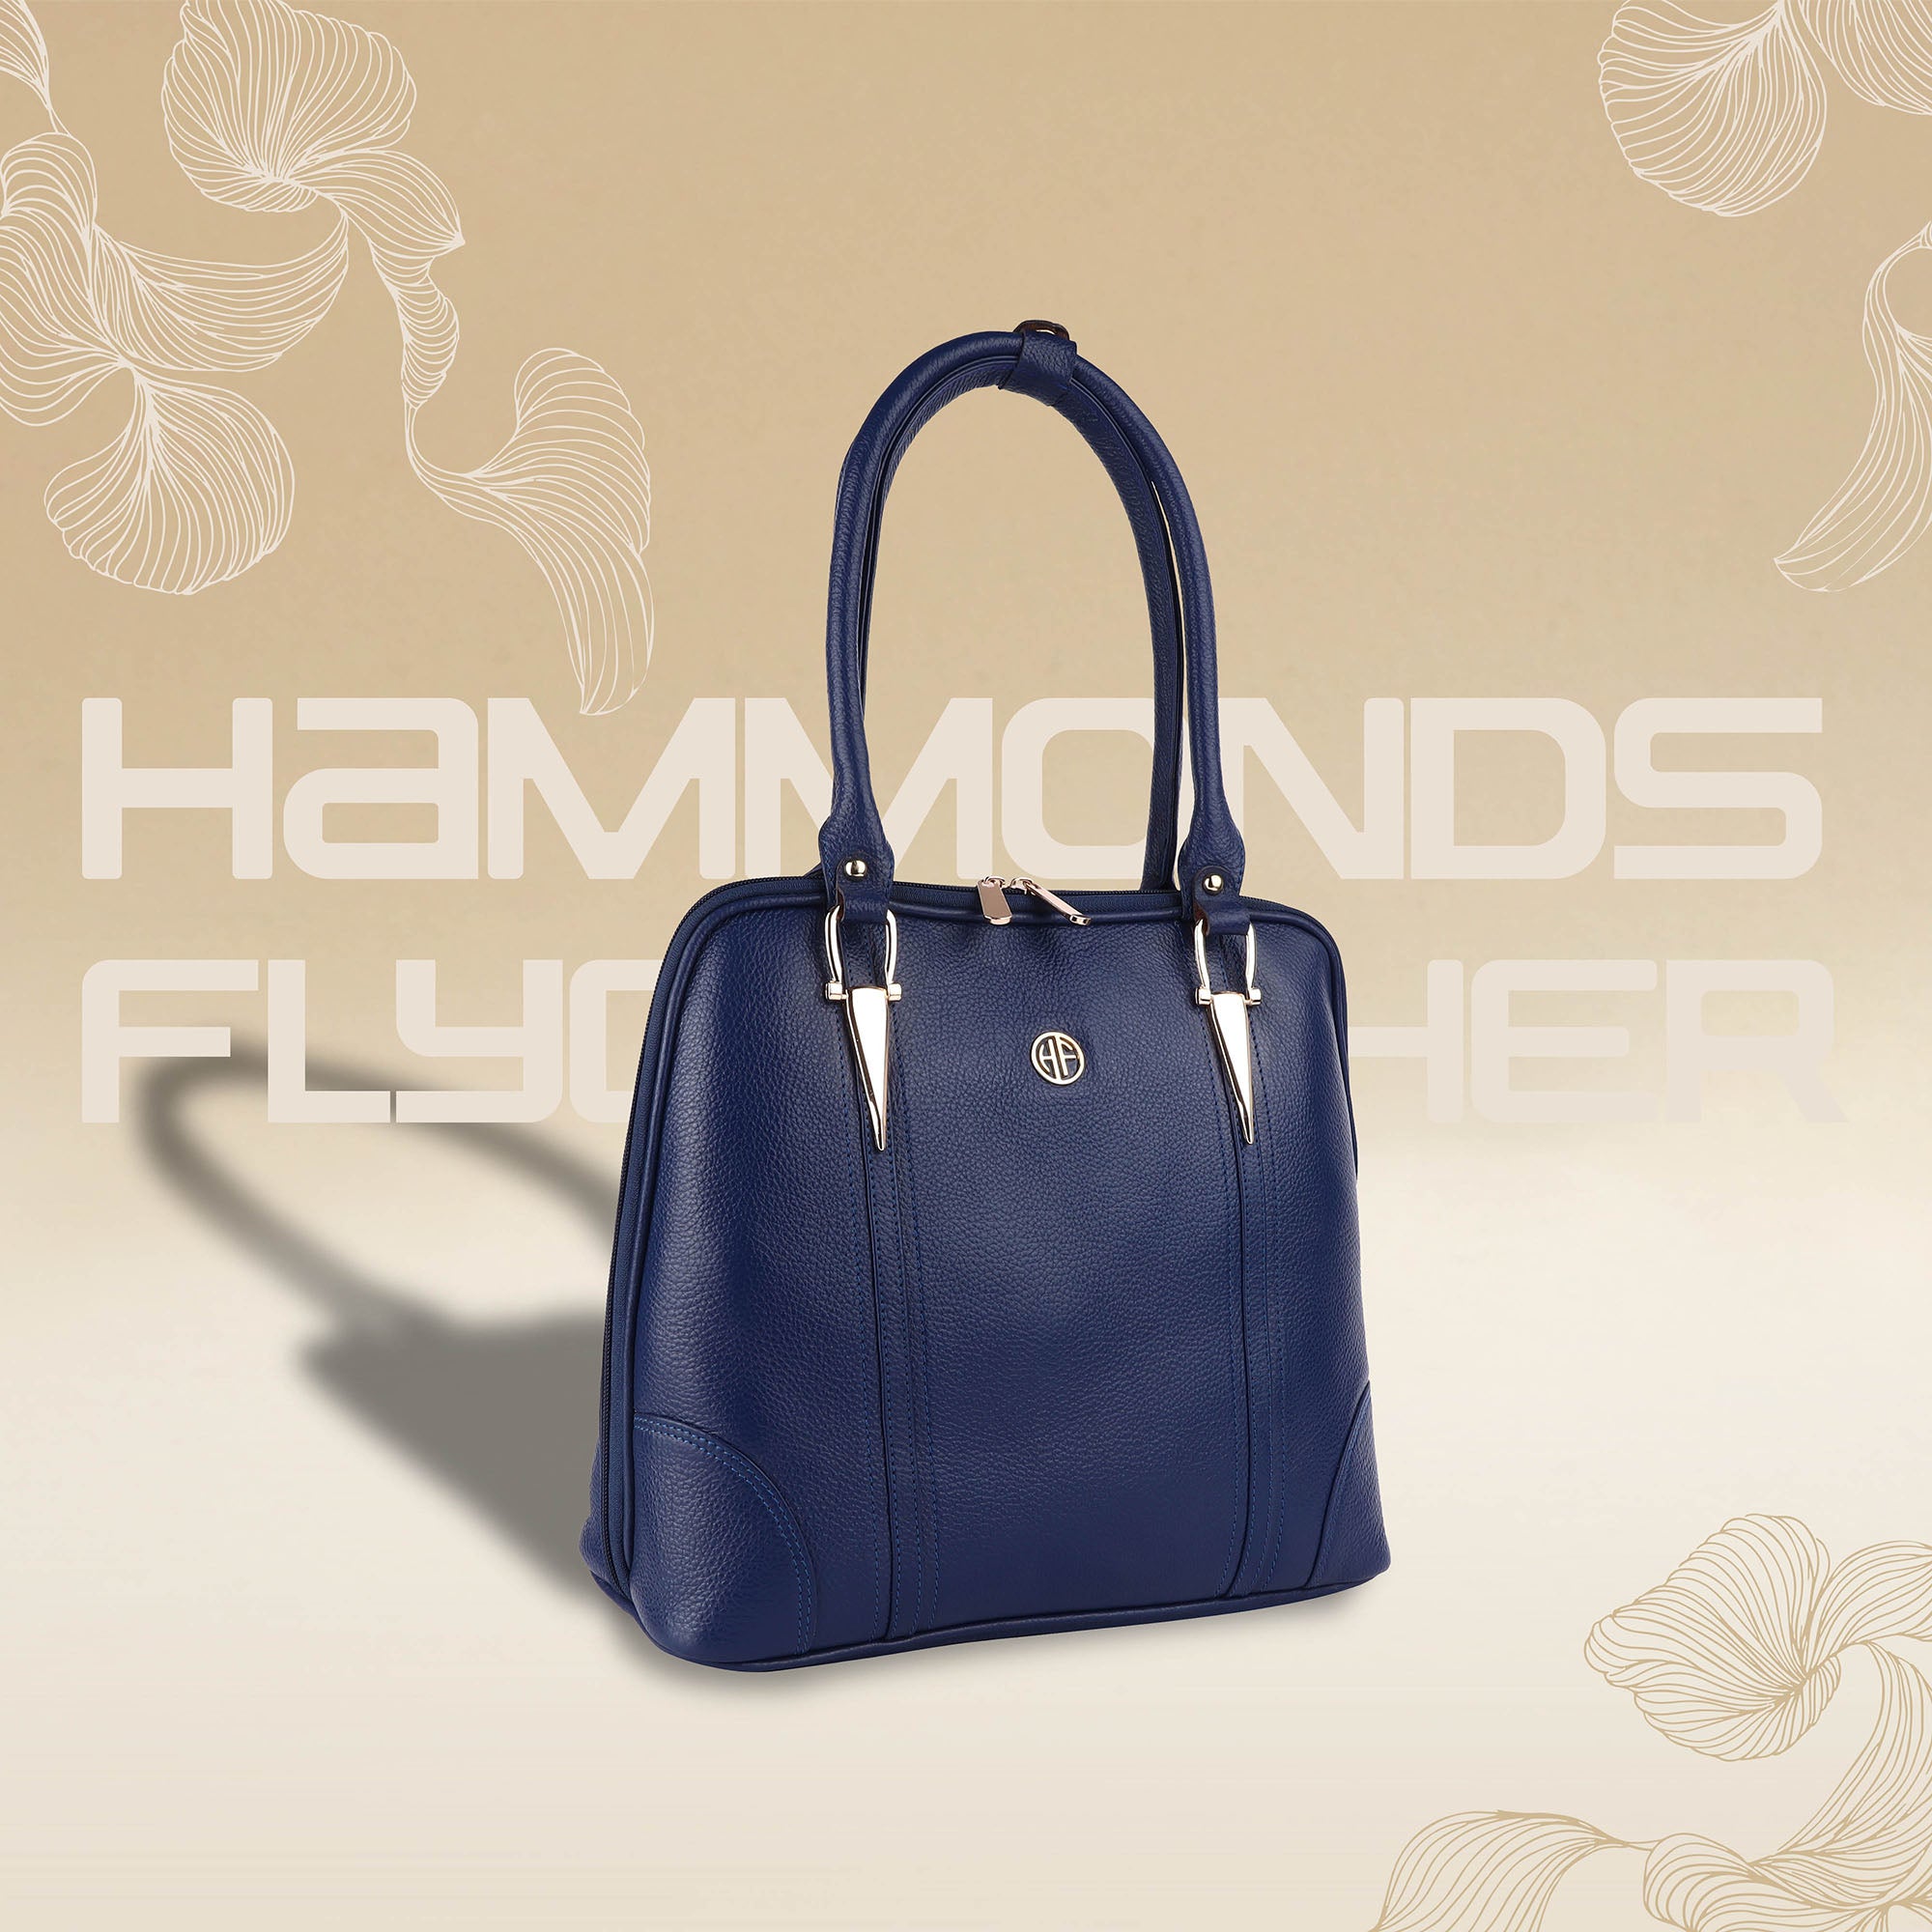 Genuine Leather Ladies Handbag with 2 Main Compartments - Adjustable & Detachable Strap